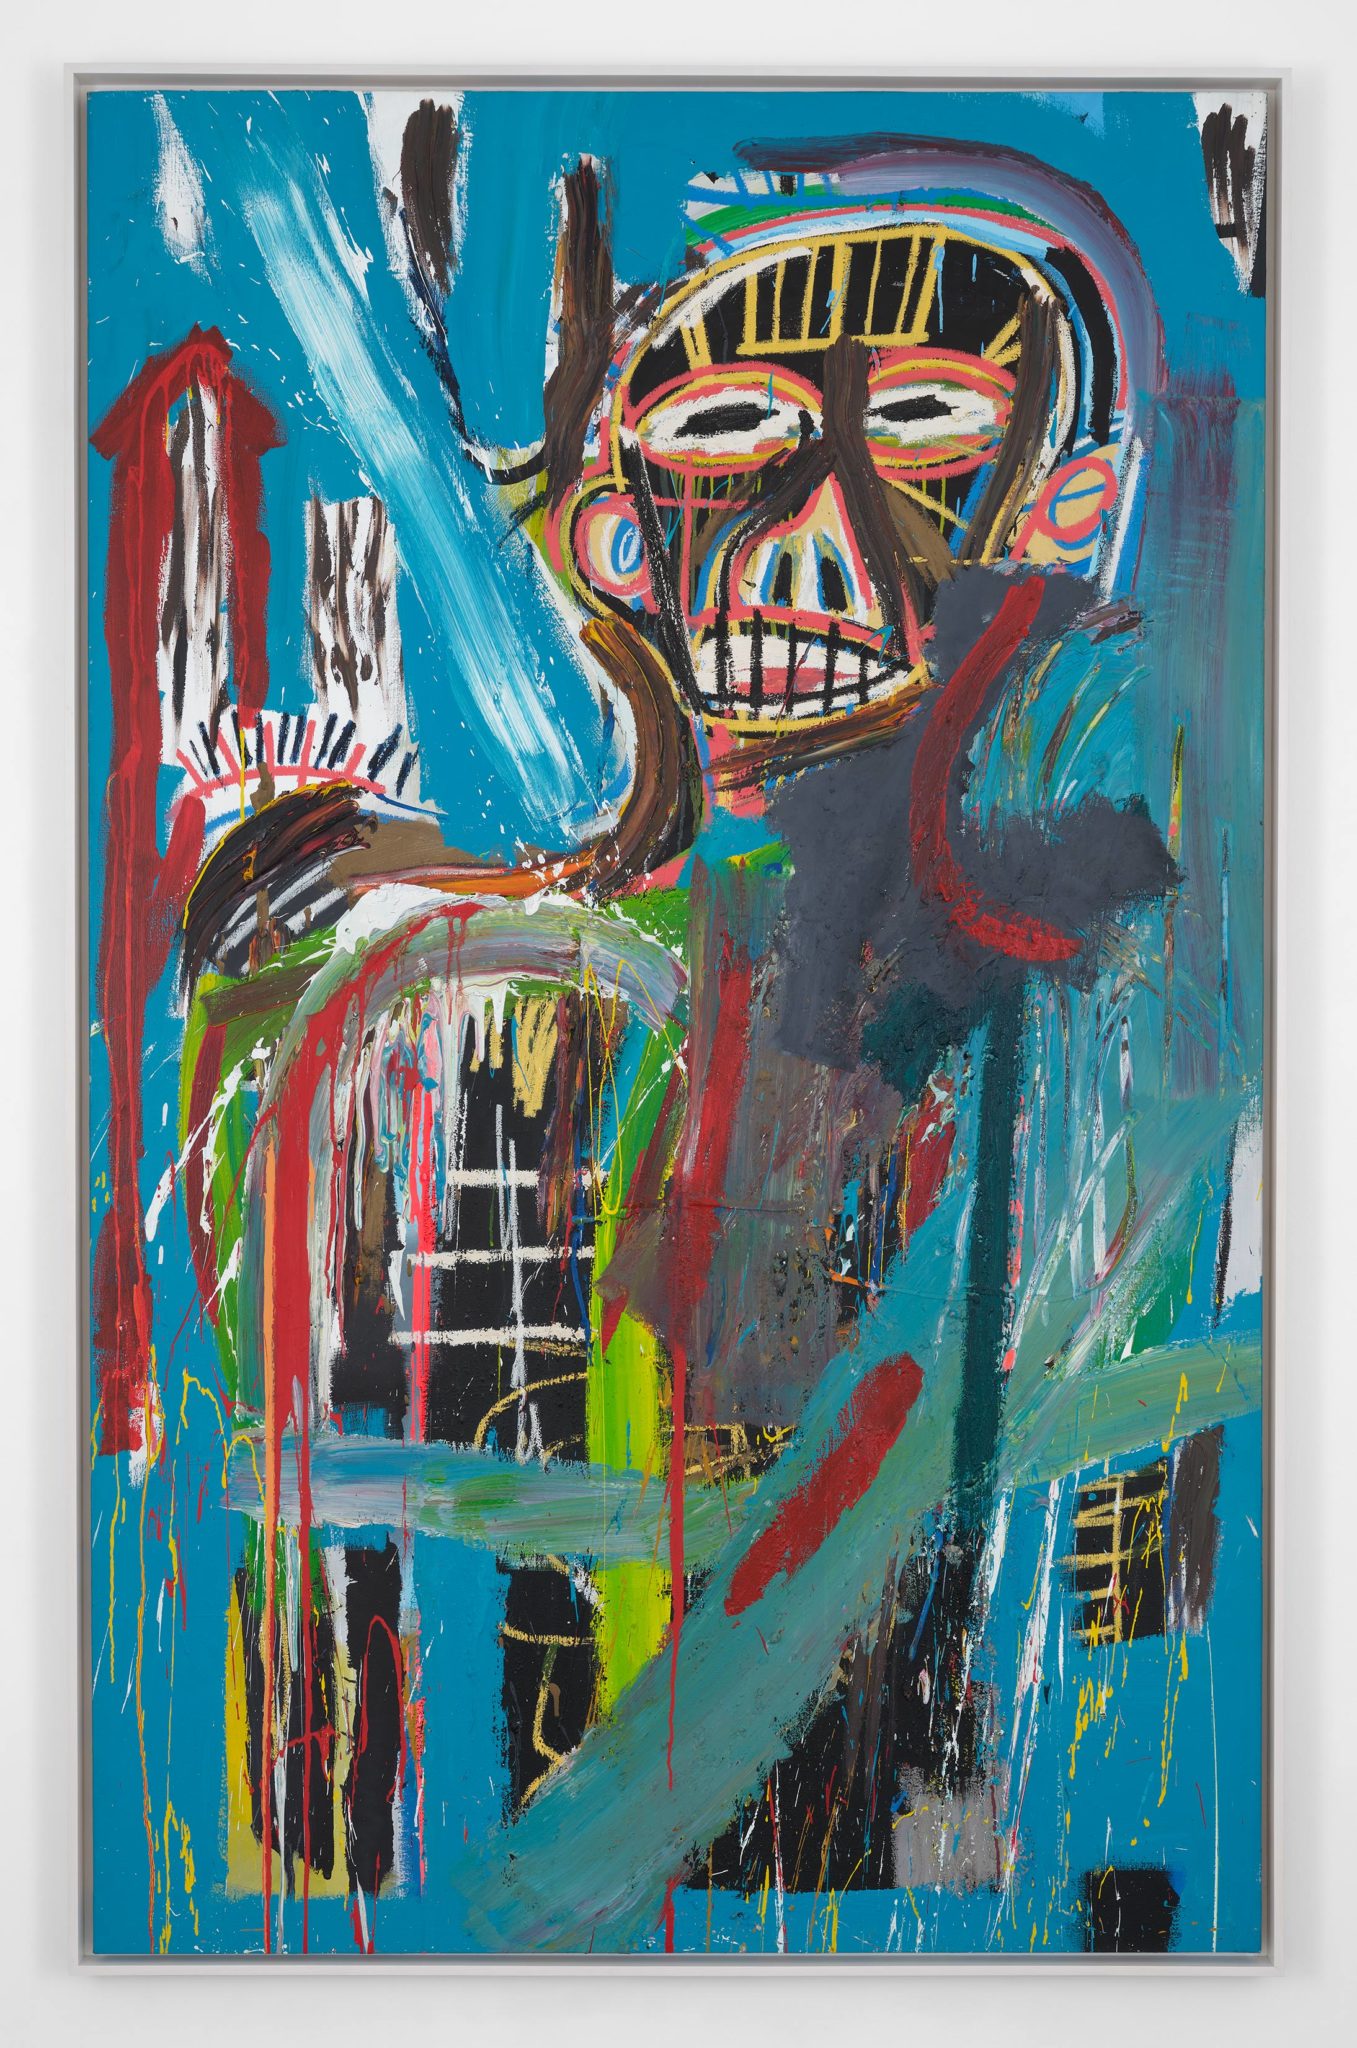 Jean-Michel Basquiat's painting Untitled (1982)